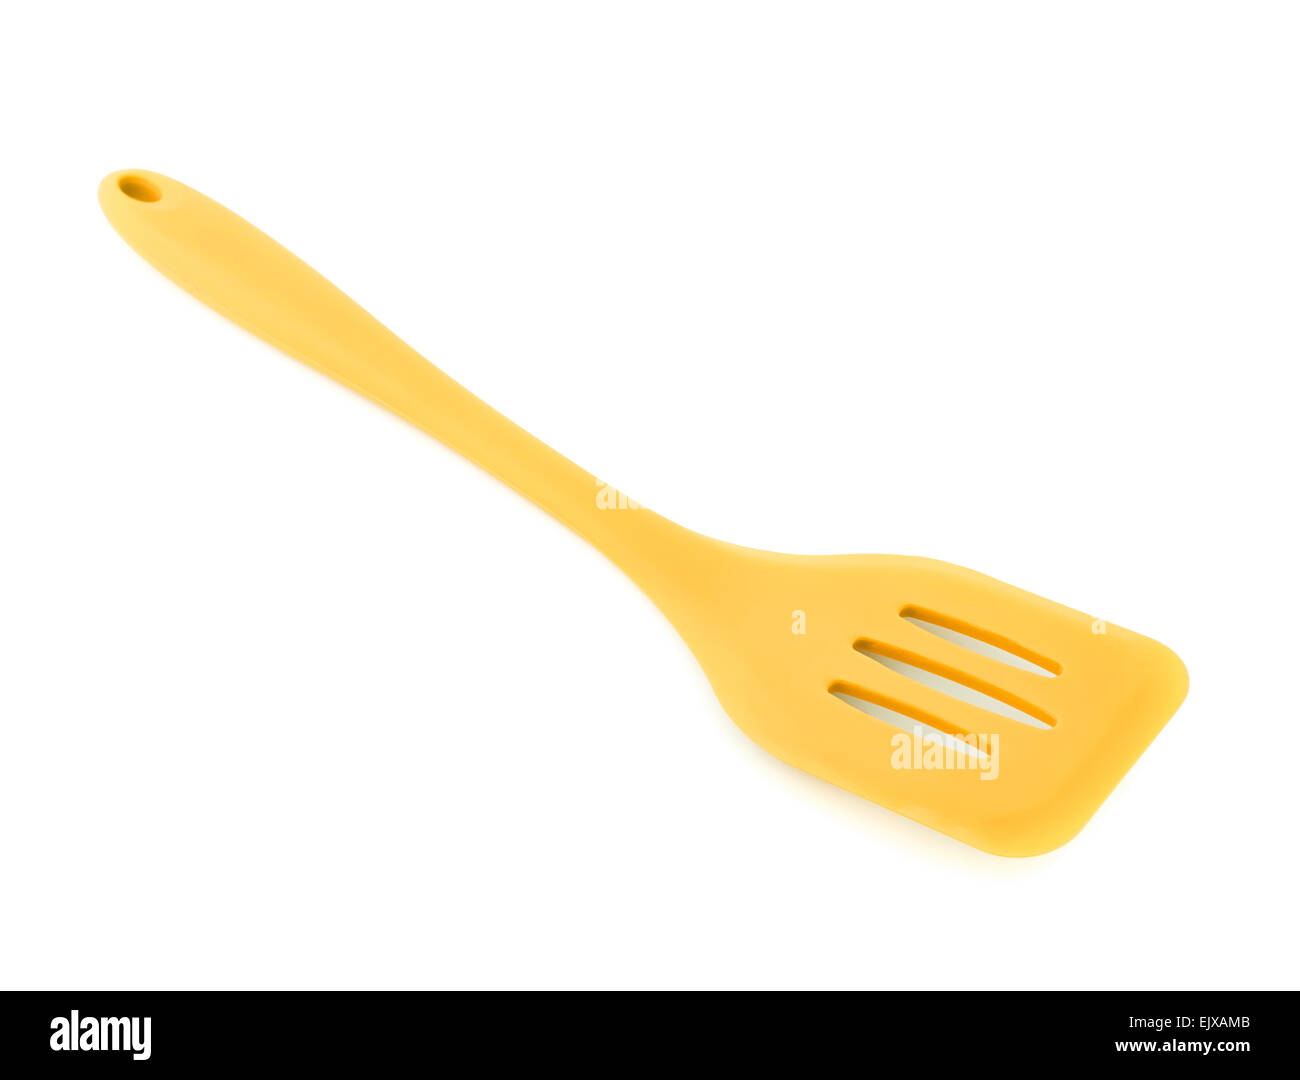 https://c8.alamy.com/comp/EJXAMB/cooking-silicone-spatula-isolated-EJXAMB.jpg